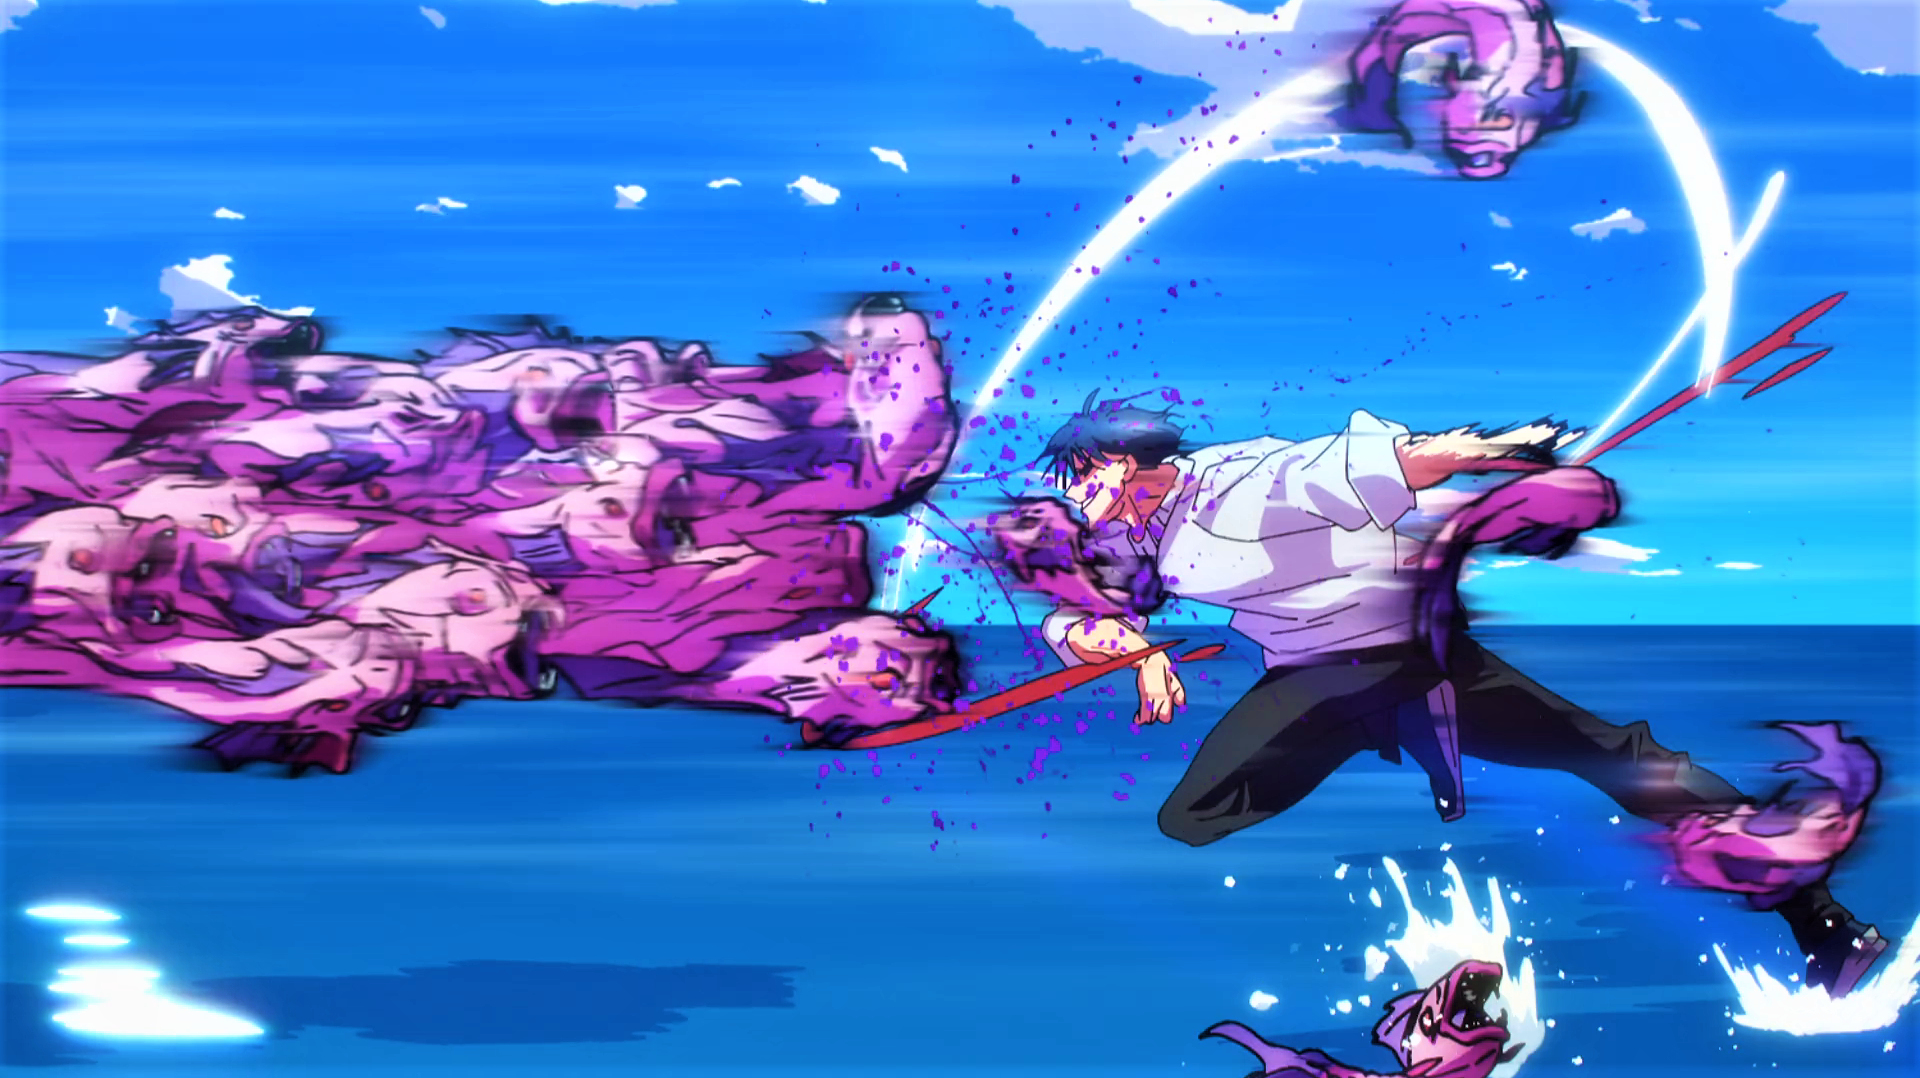 Anime 1920x1078 Jujutsu Kaisen Fushiguro Toji fish piranhas water running fighting Nunchucks sky clouds sweater anime anime screenshot anime boys smiling